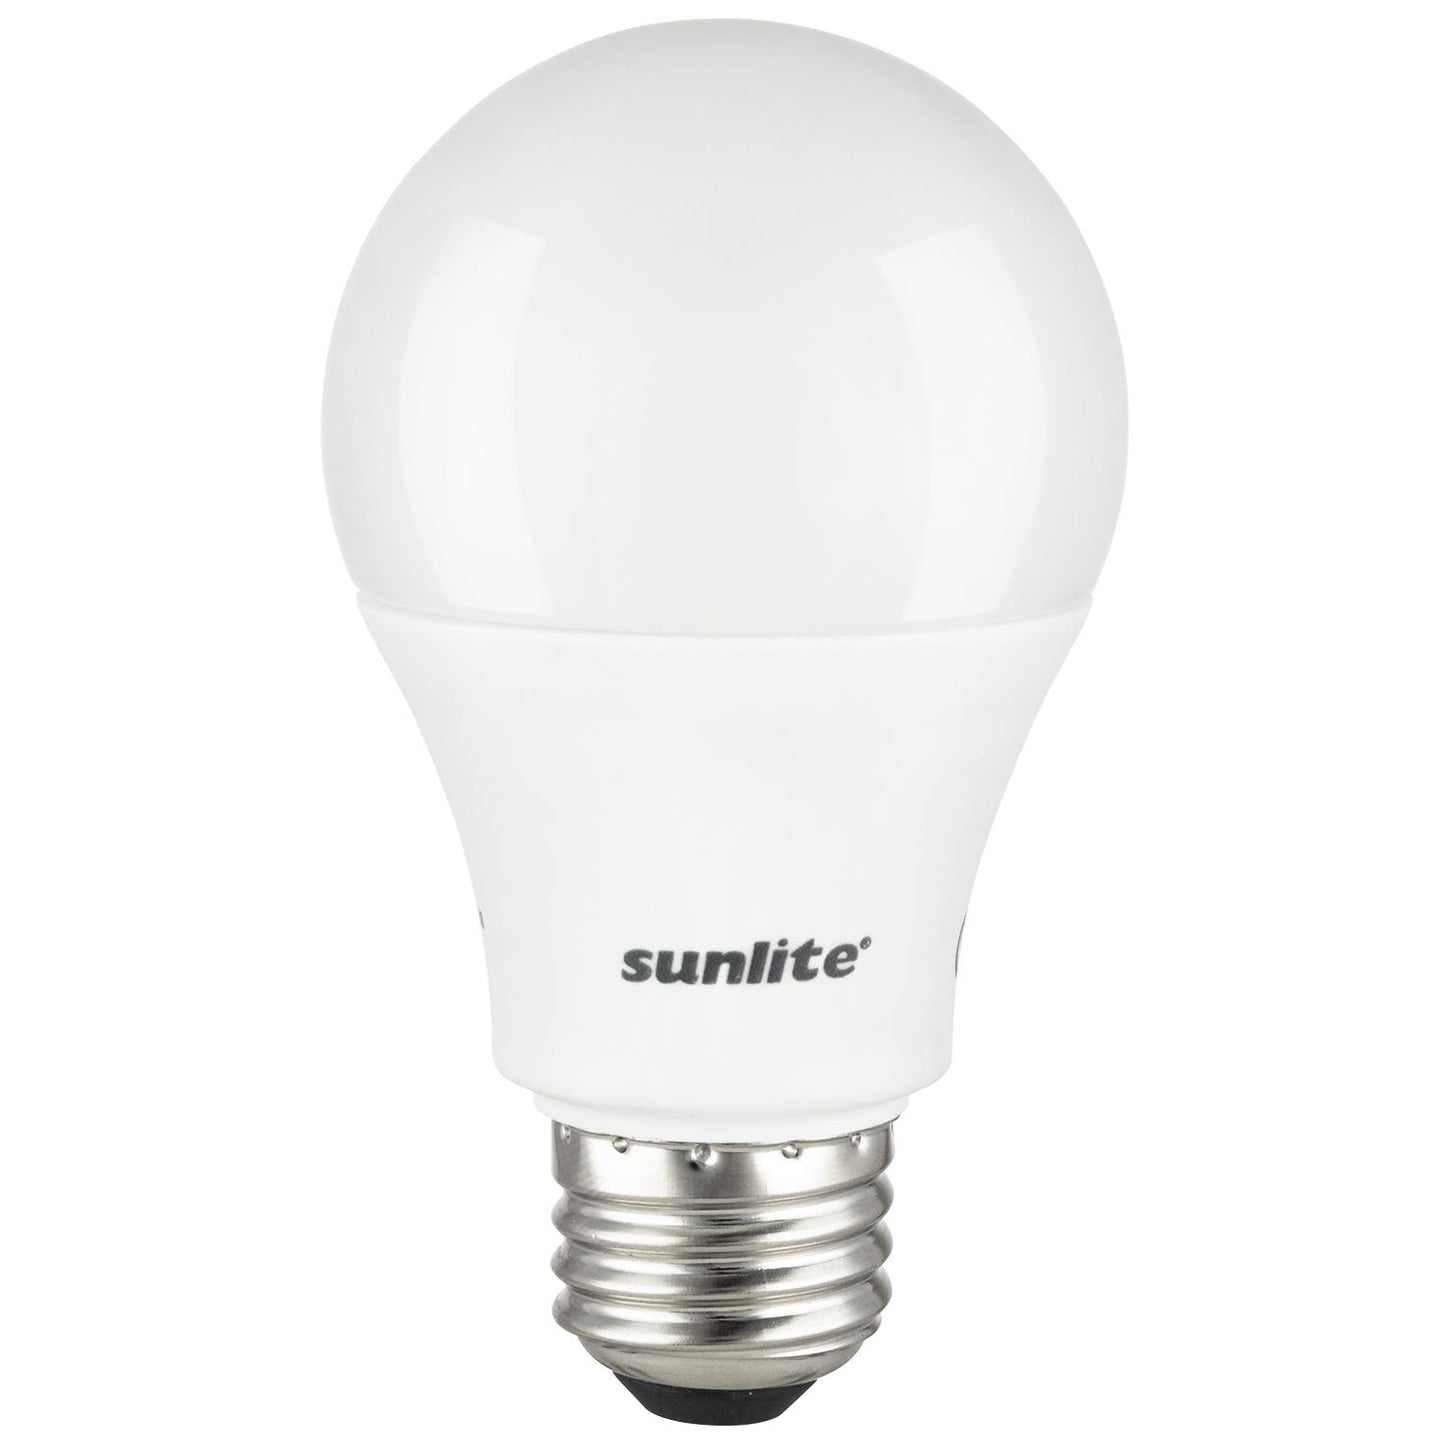 3 Pack Sunlite A19 LED Bulbs, 14 Watt (100 Watt Equivalent), 1500 Lumens, Medium (E26) Base, 6500K Daylight, UL Listed